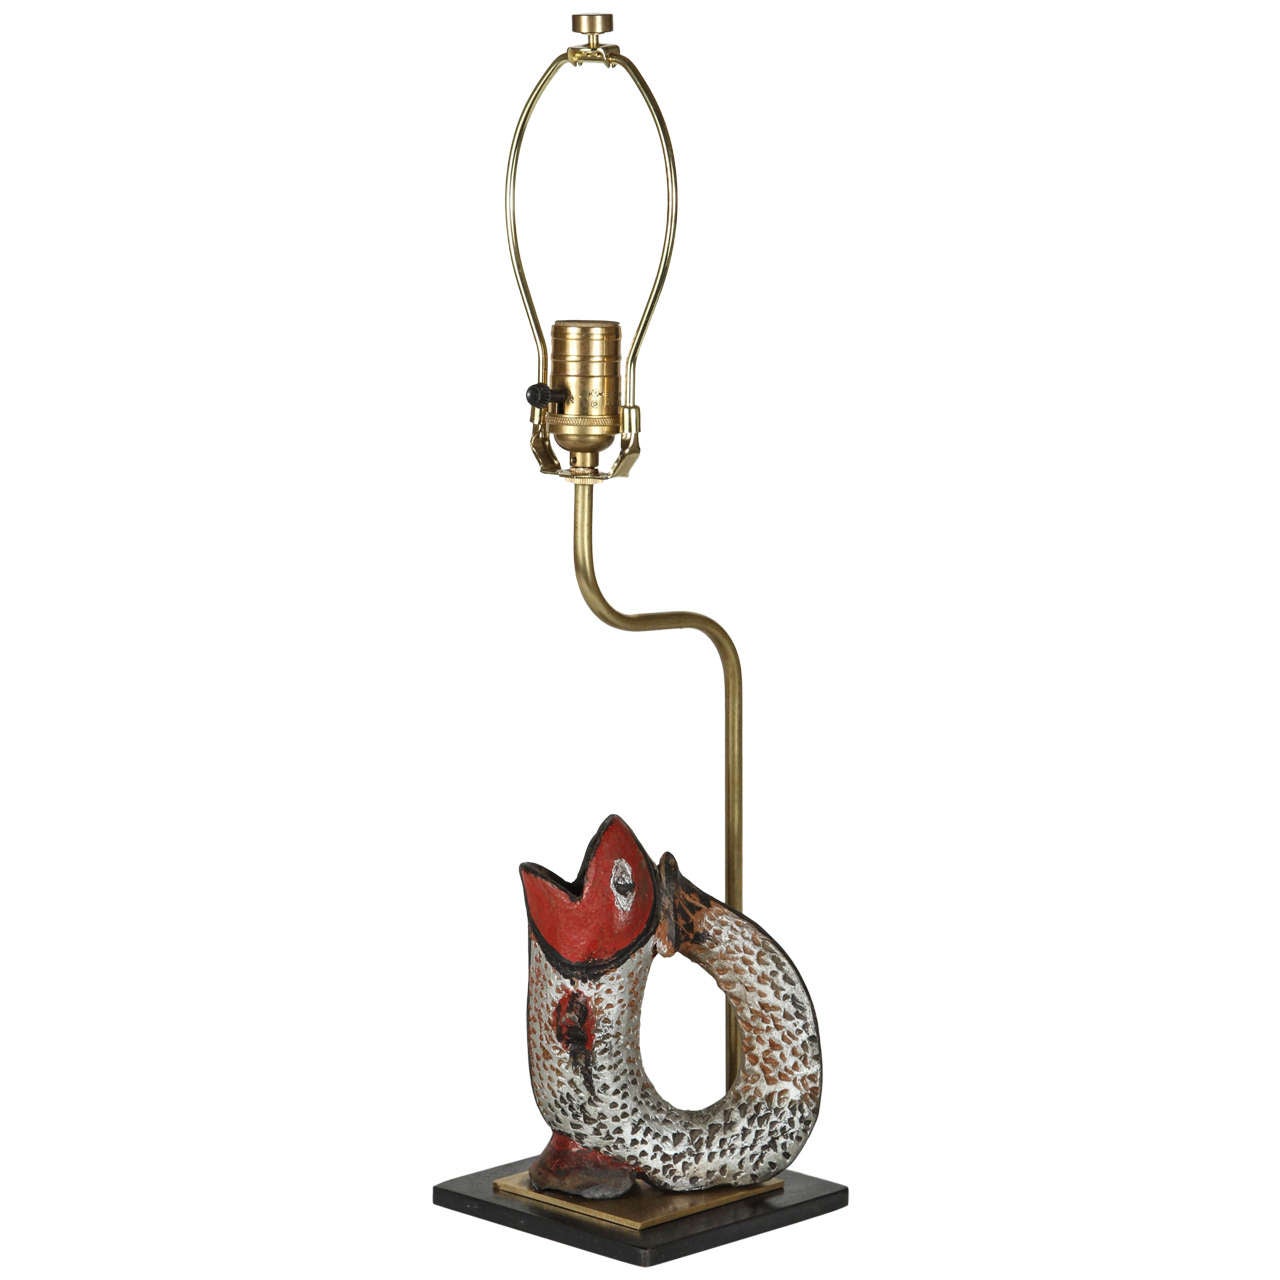 Folk Art Fish Shaped Pitcher Lamp For Sale